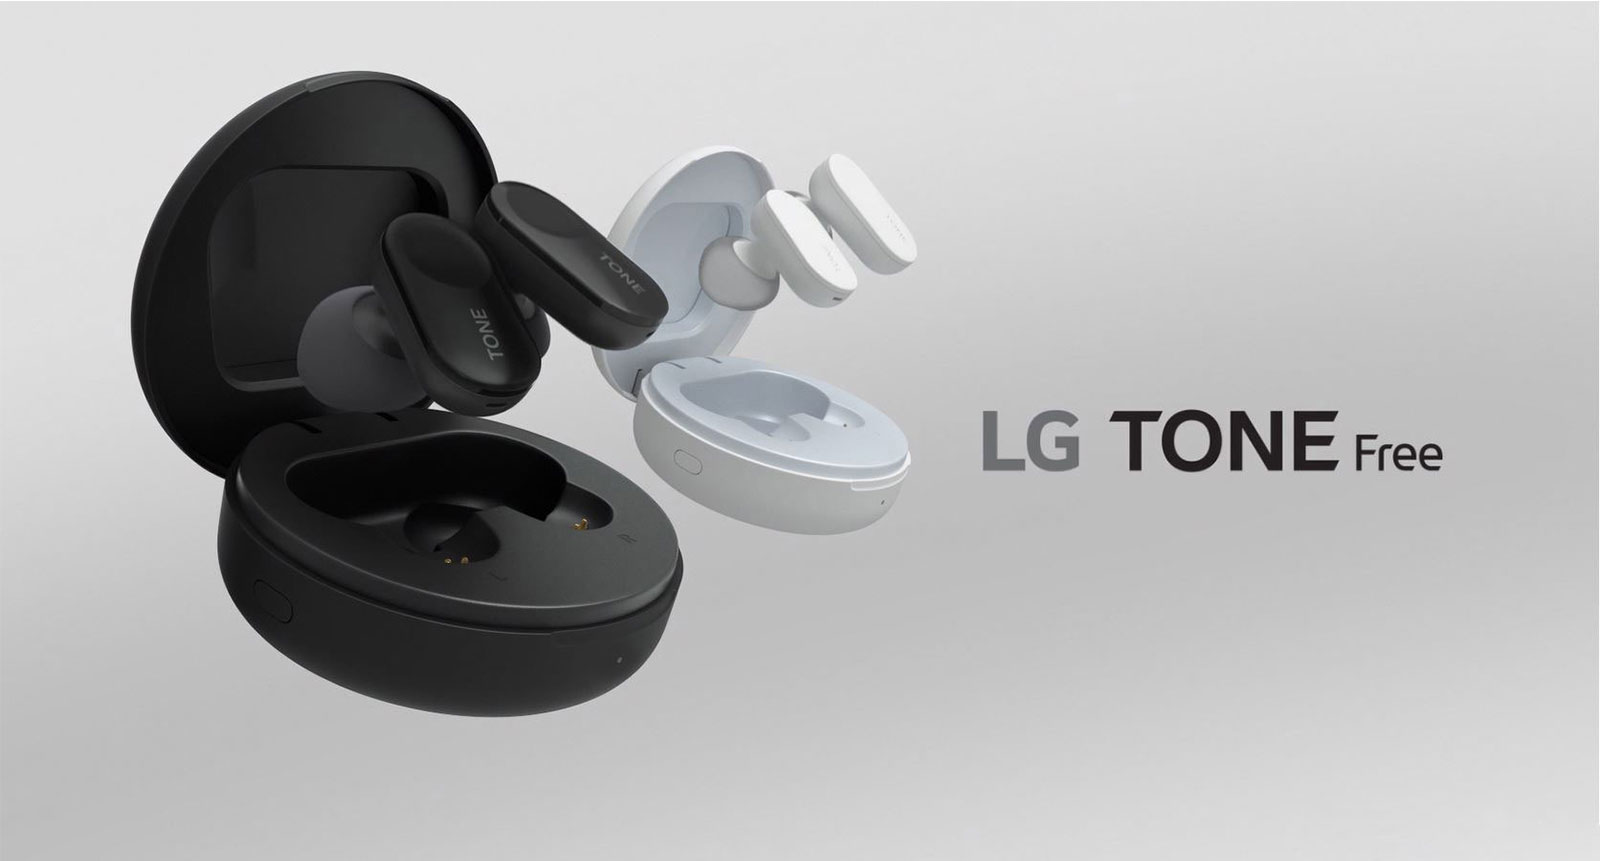 LG-Tone-Free-Feature-01-D1.jpg